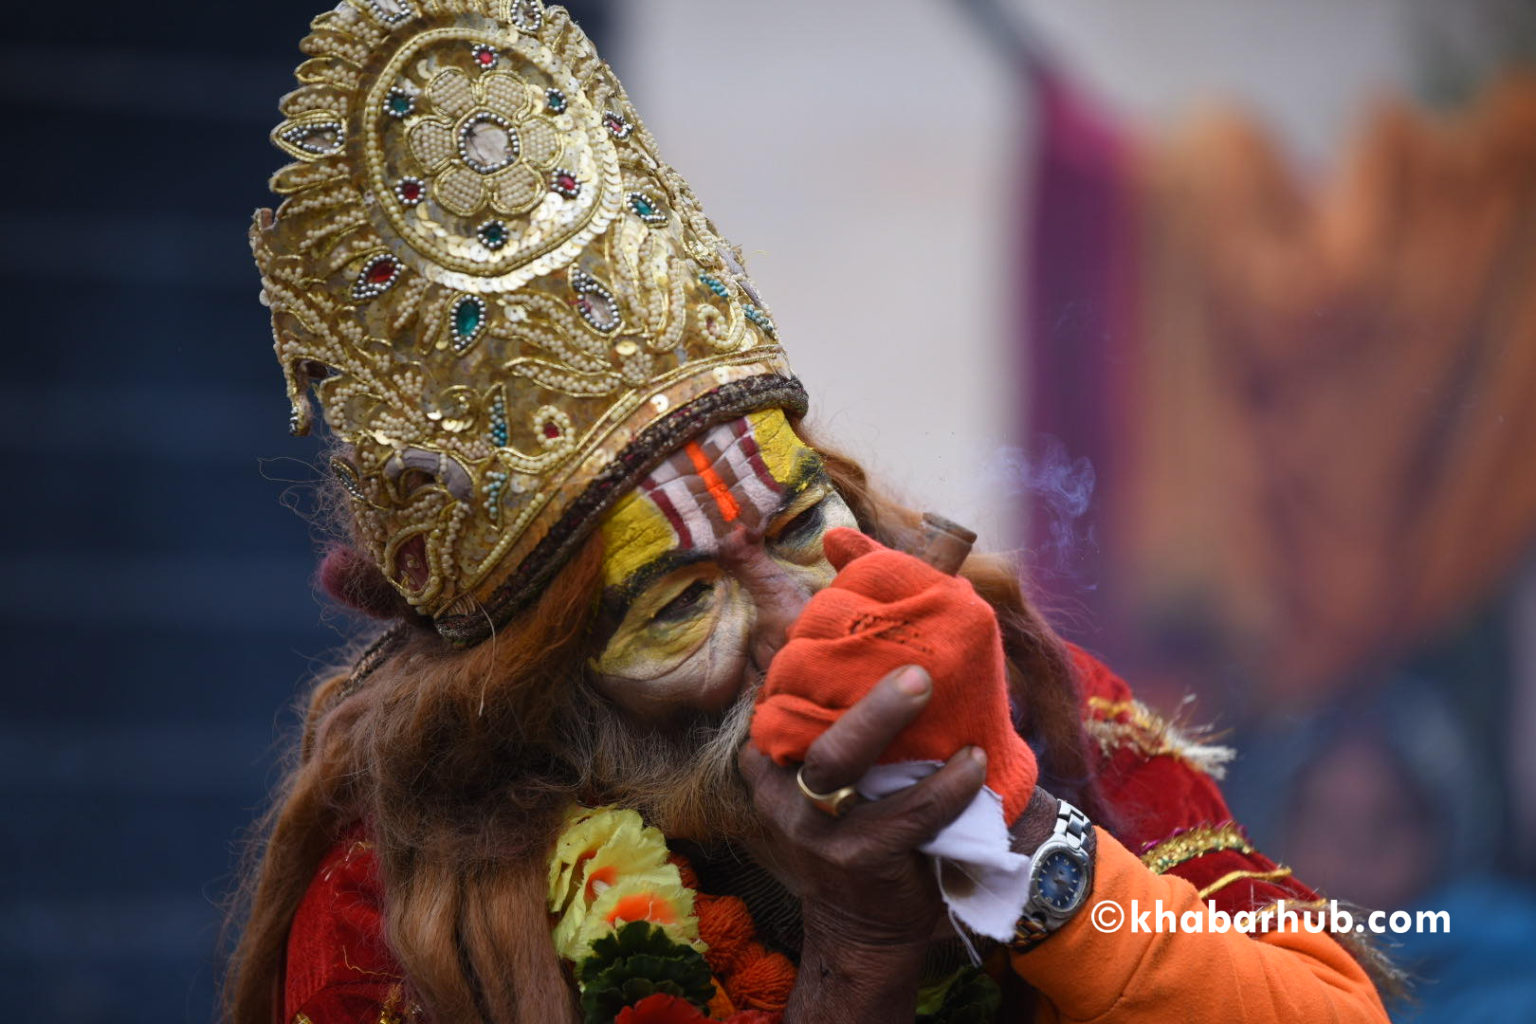 In pics: Maha Shivaratri festival at Pashupatinath Temple